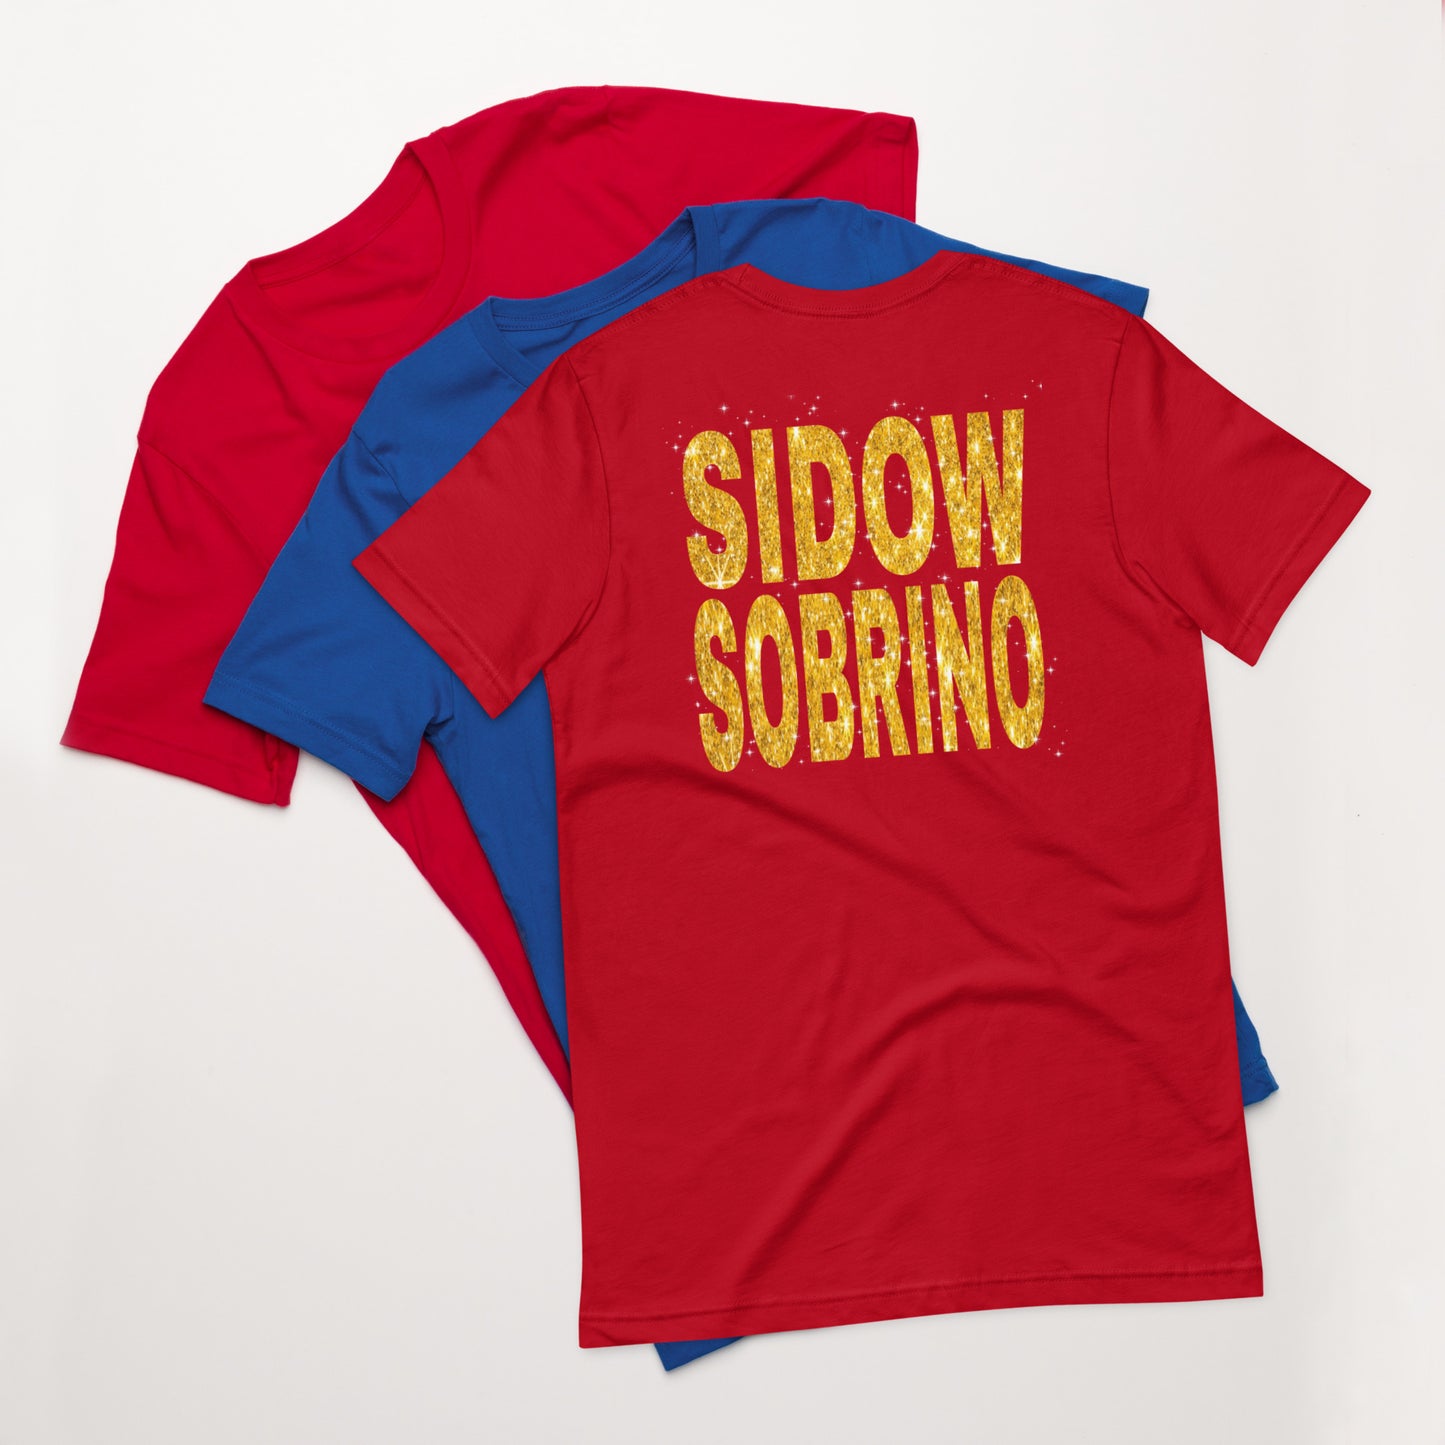 Sidow Sobrino Unisex t-shirt